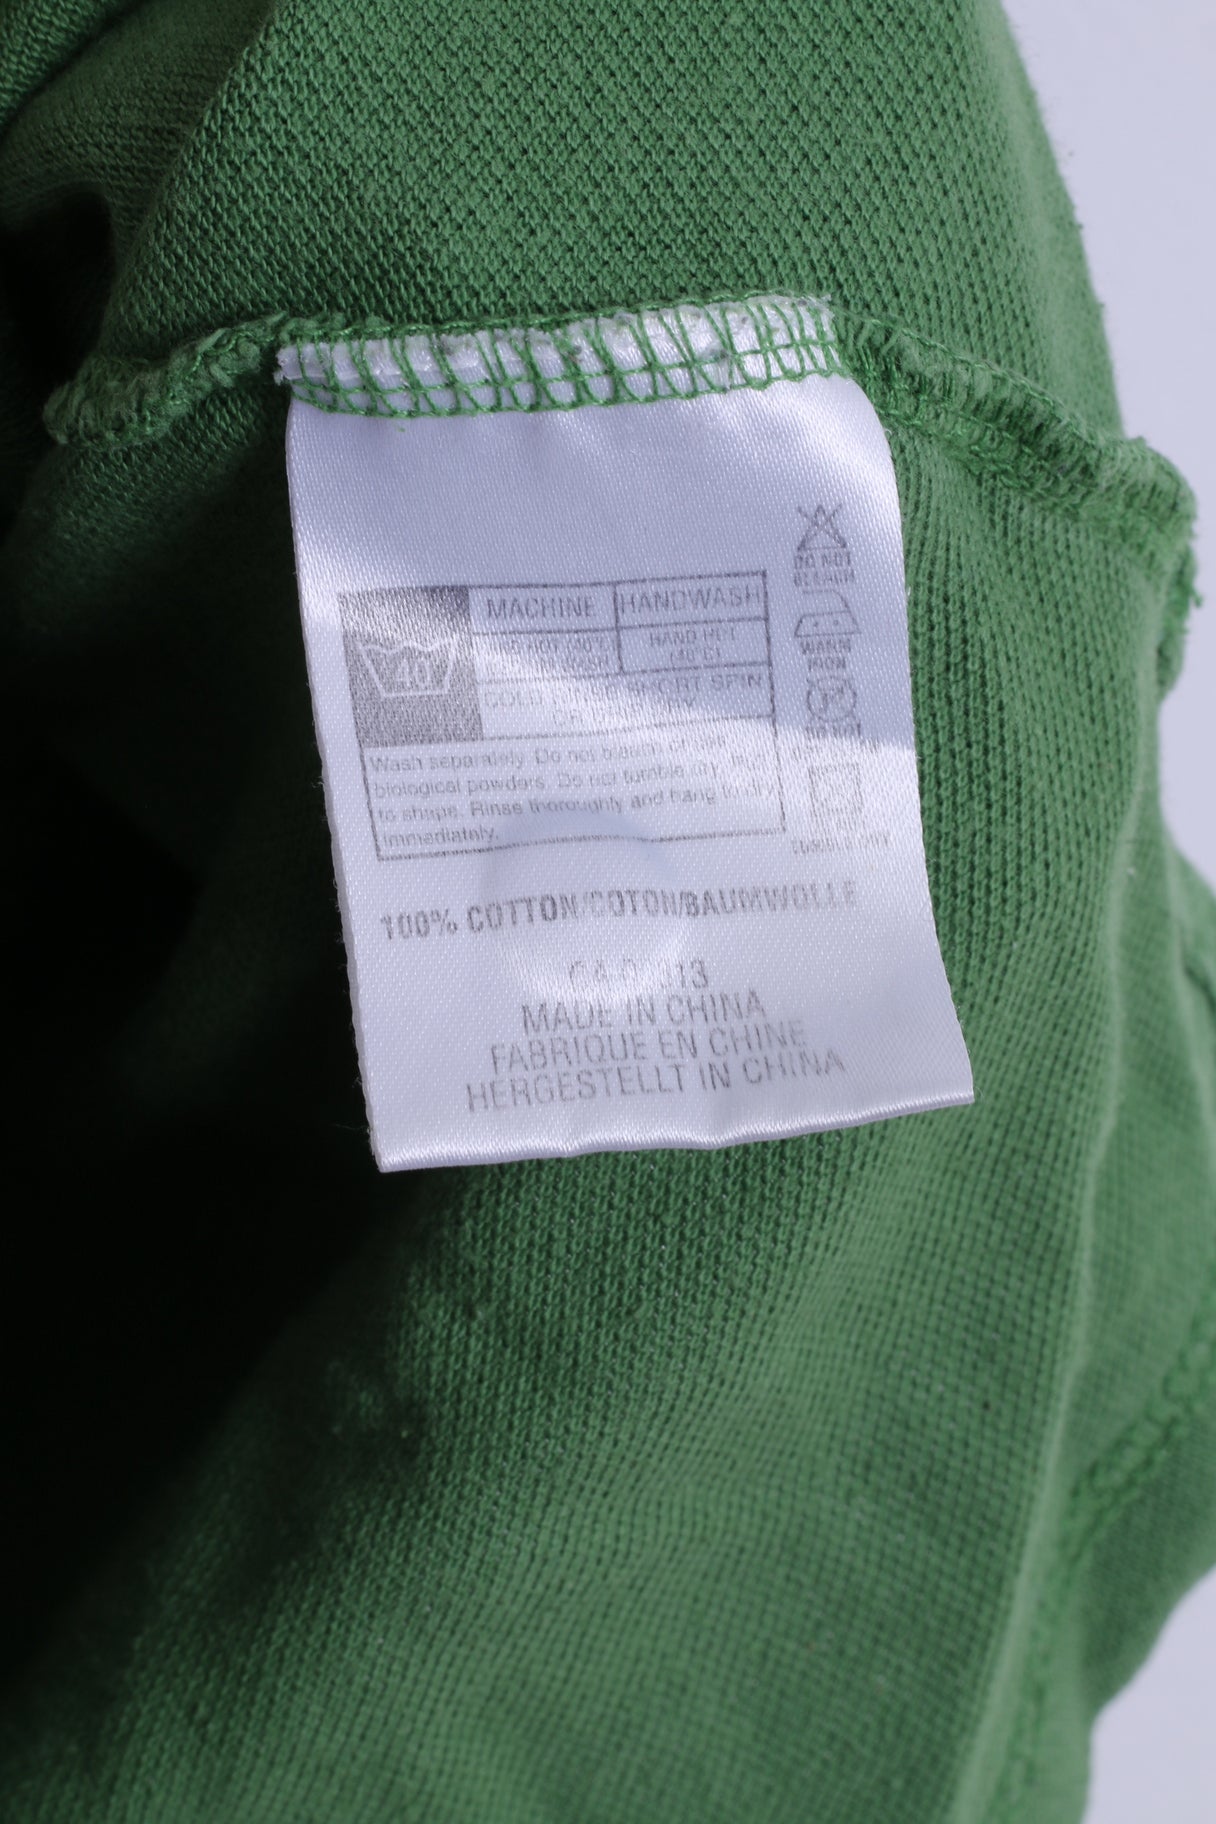 Lyle & Scott Vintage Mens S (XS) Polo Shirt Green Cotton Detailed Buttons